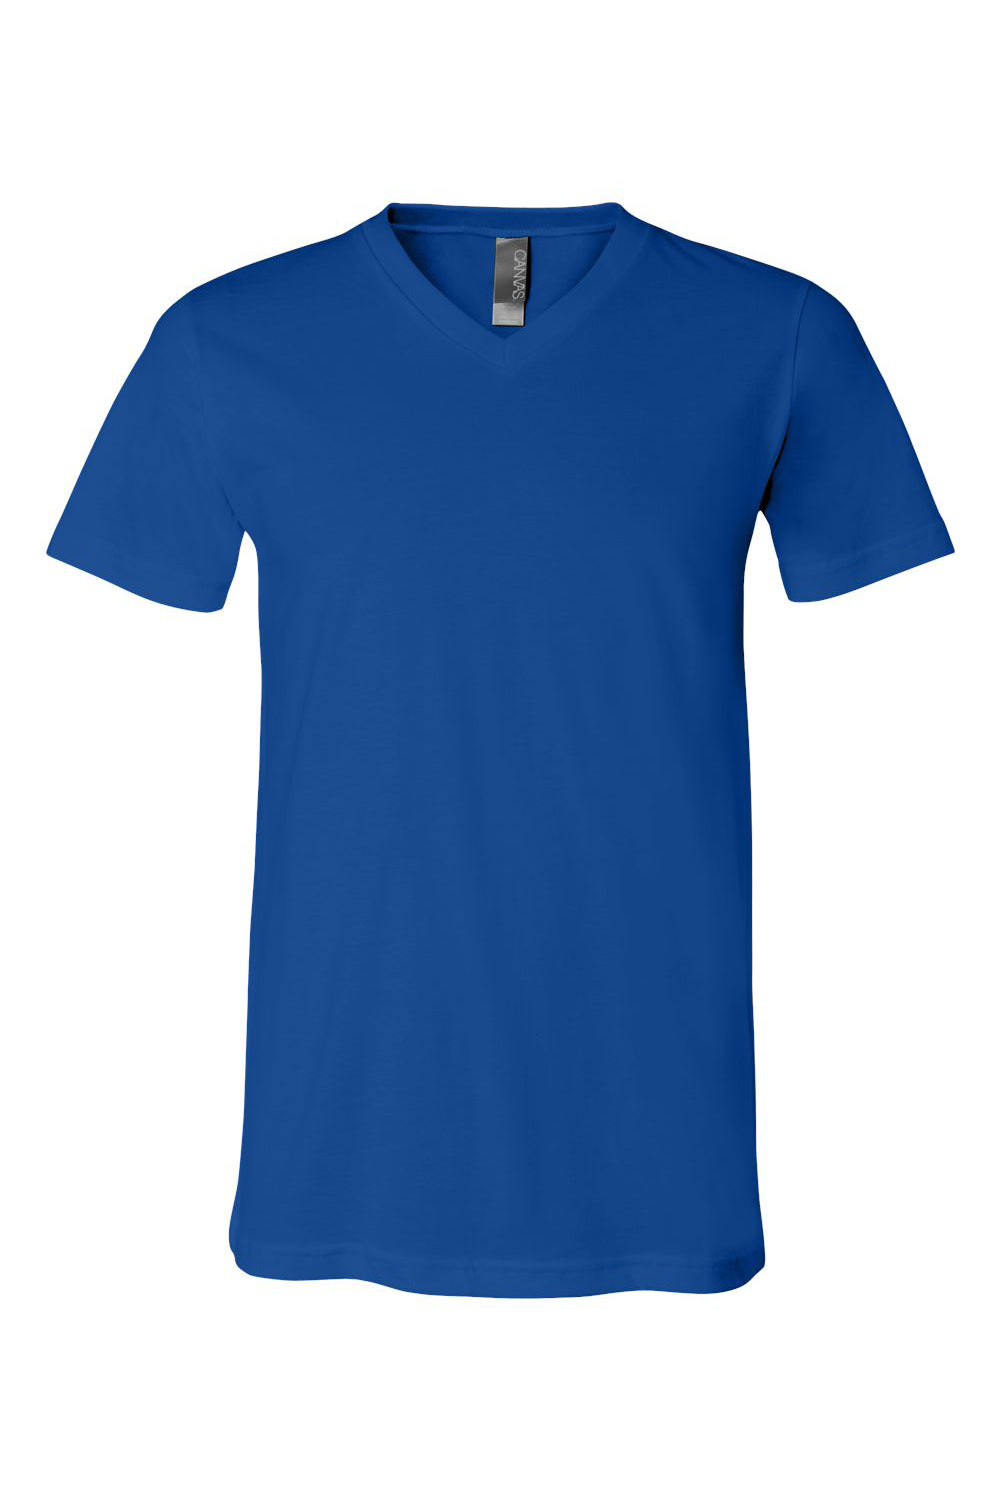 Bella + Canvas BC3005/3005/3655C Mens Jersey Short Sleeve V-Neck T-Shirt True Royal Blue Flat Front